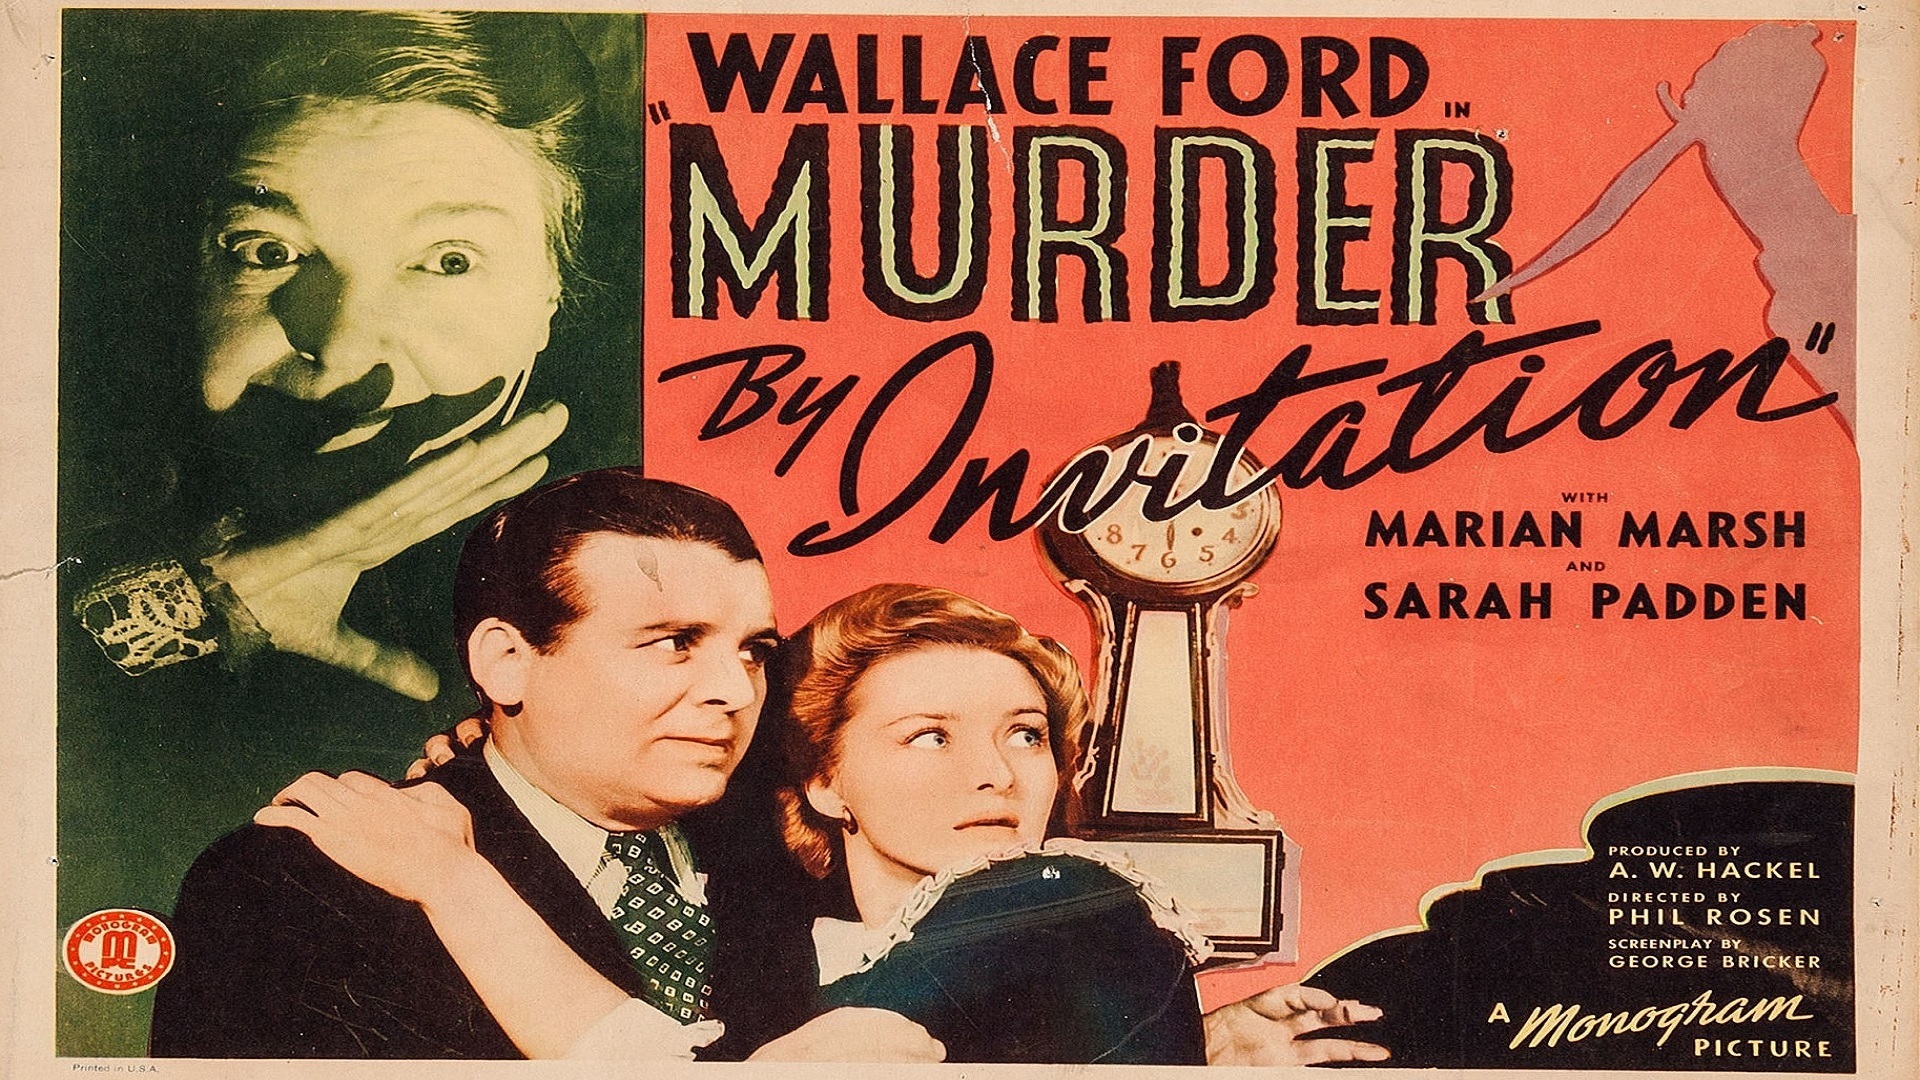 Murder by Invitation (1941) - Phil Rosen | Synopsis, Characteristics